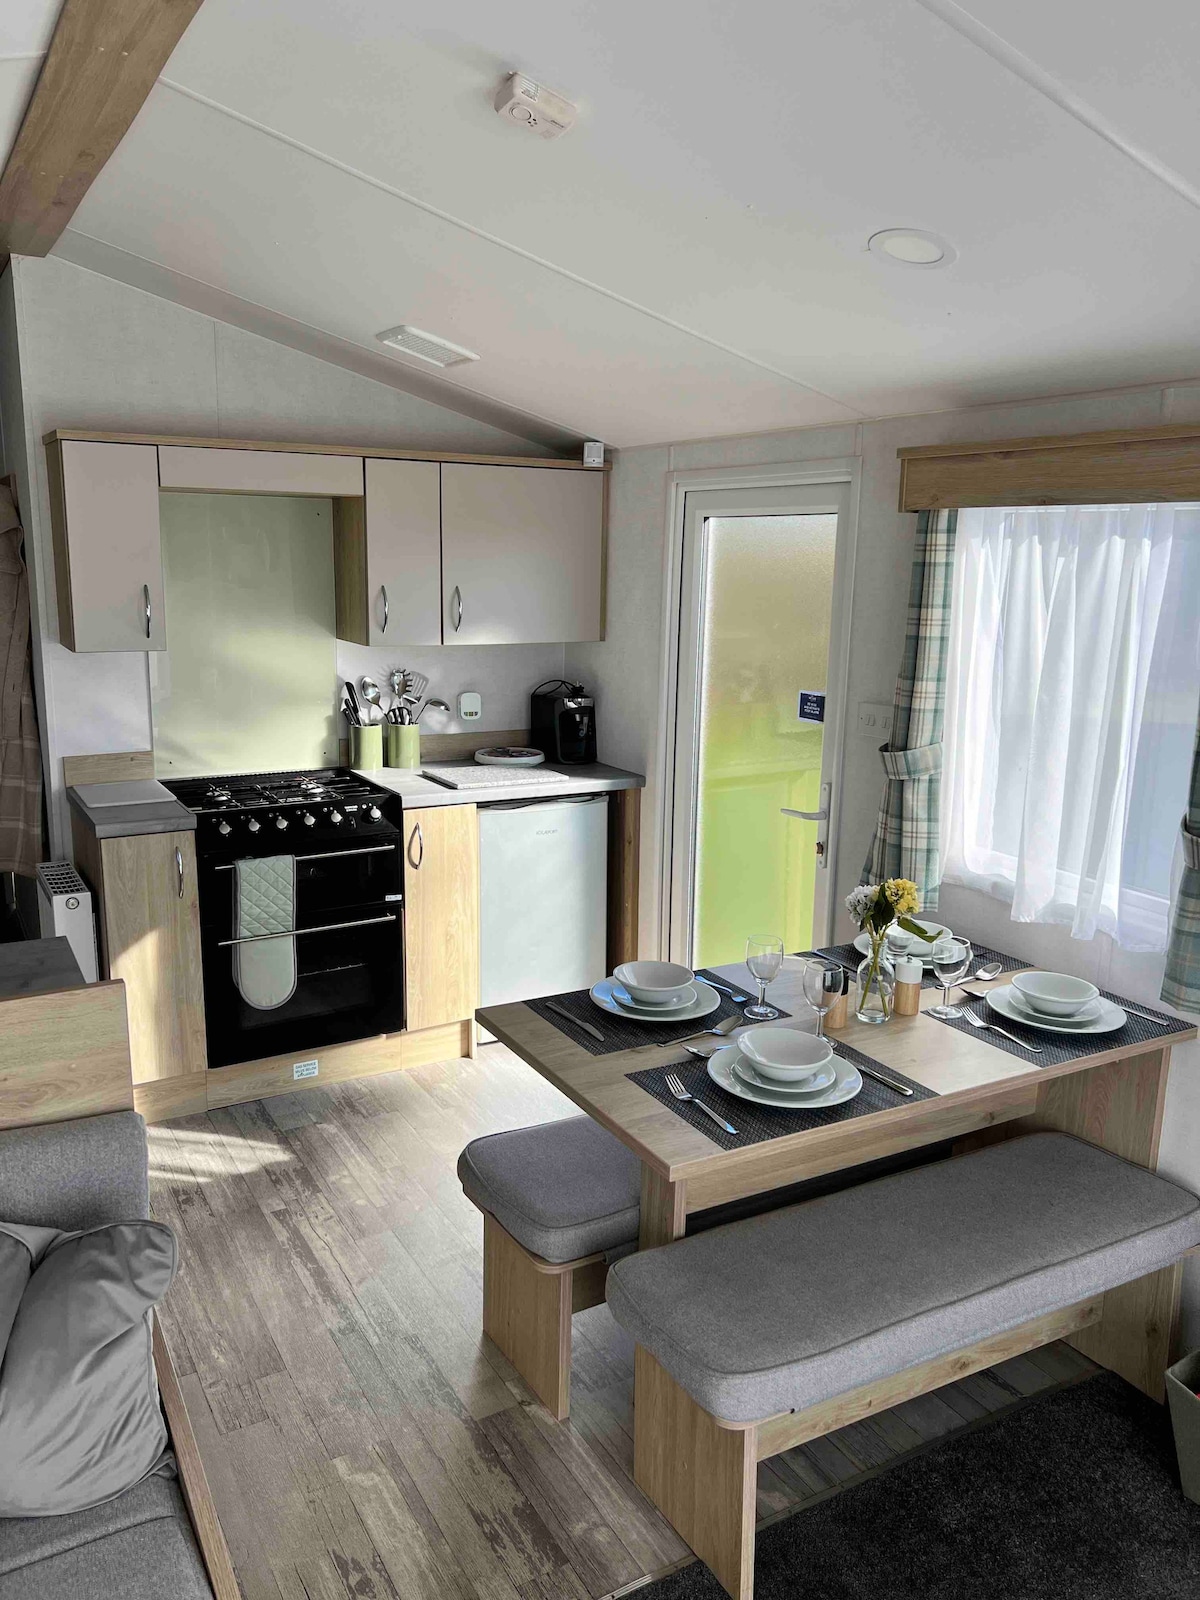 Modern 3 bedroom Caravan Situated at Seton Sands